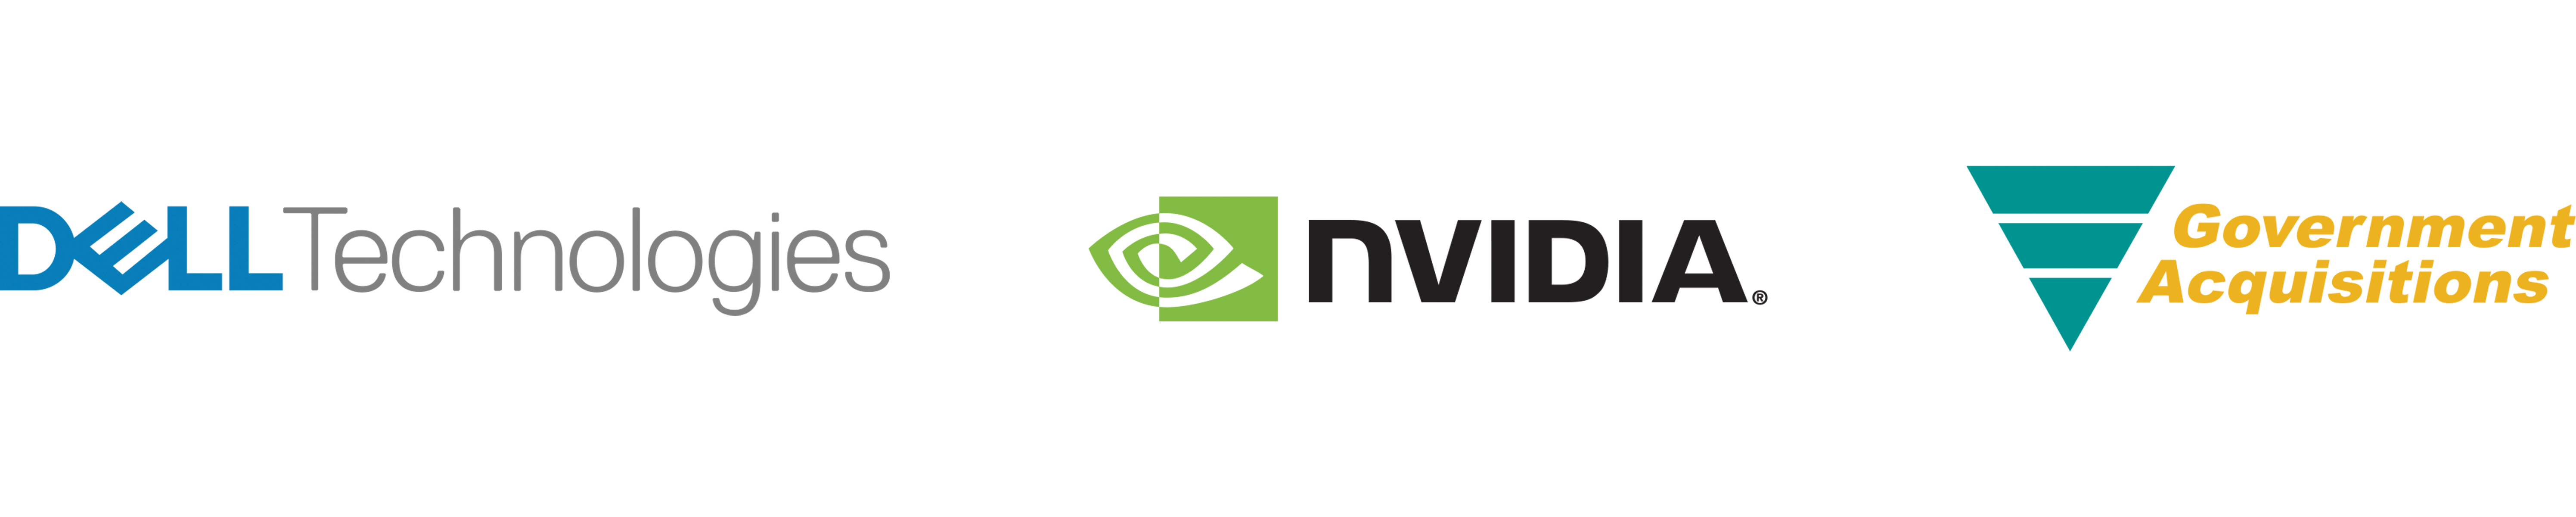 DELL Technologies | GAI | NVIDIA logo